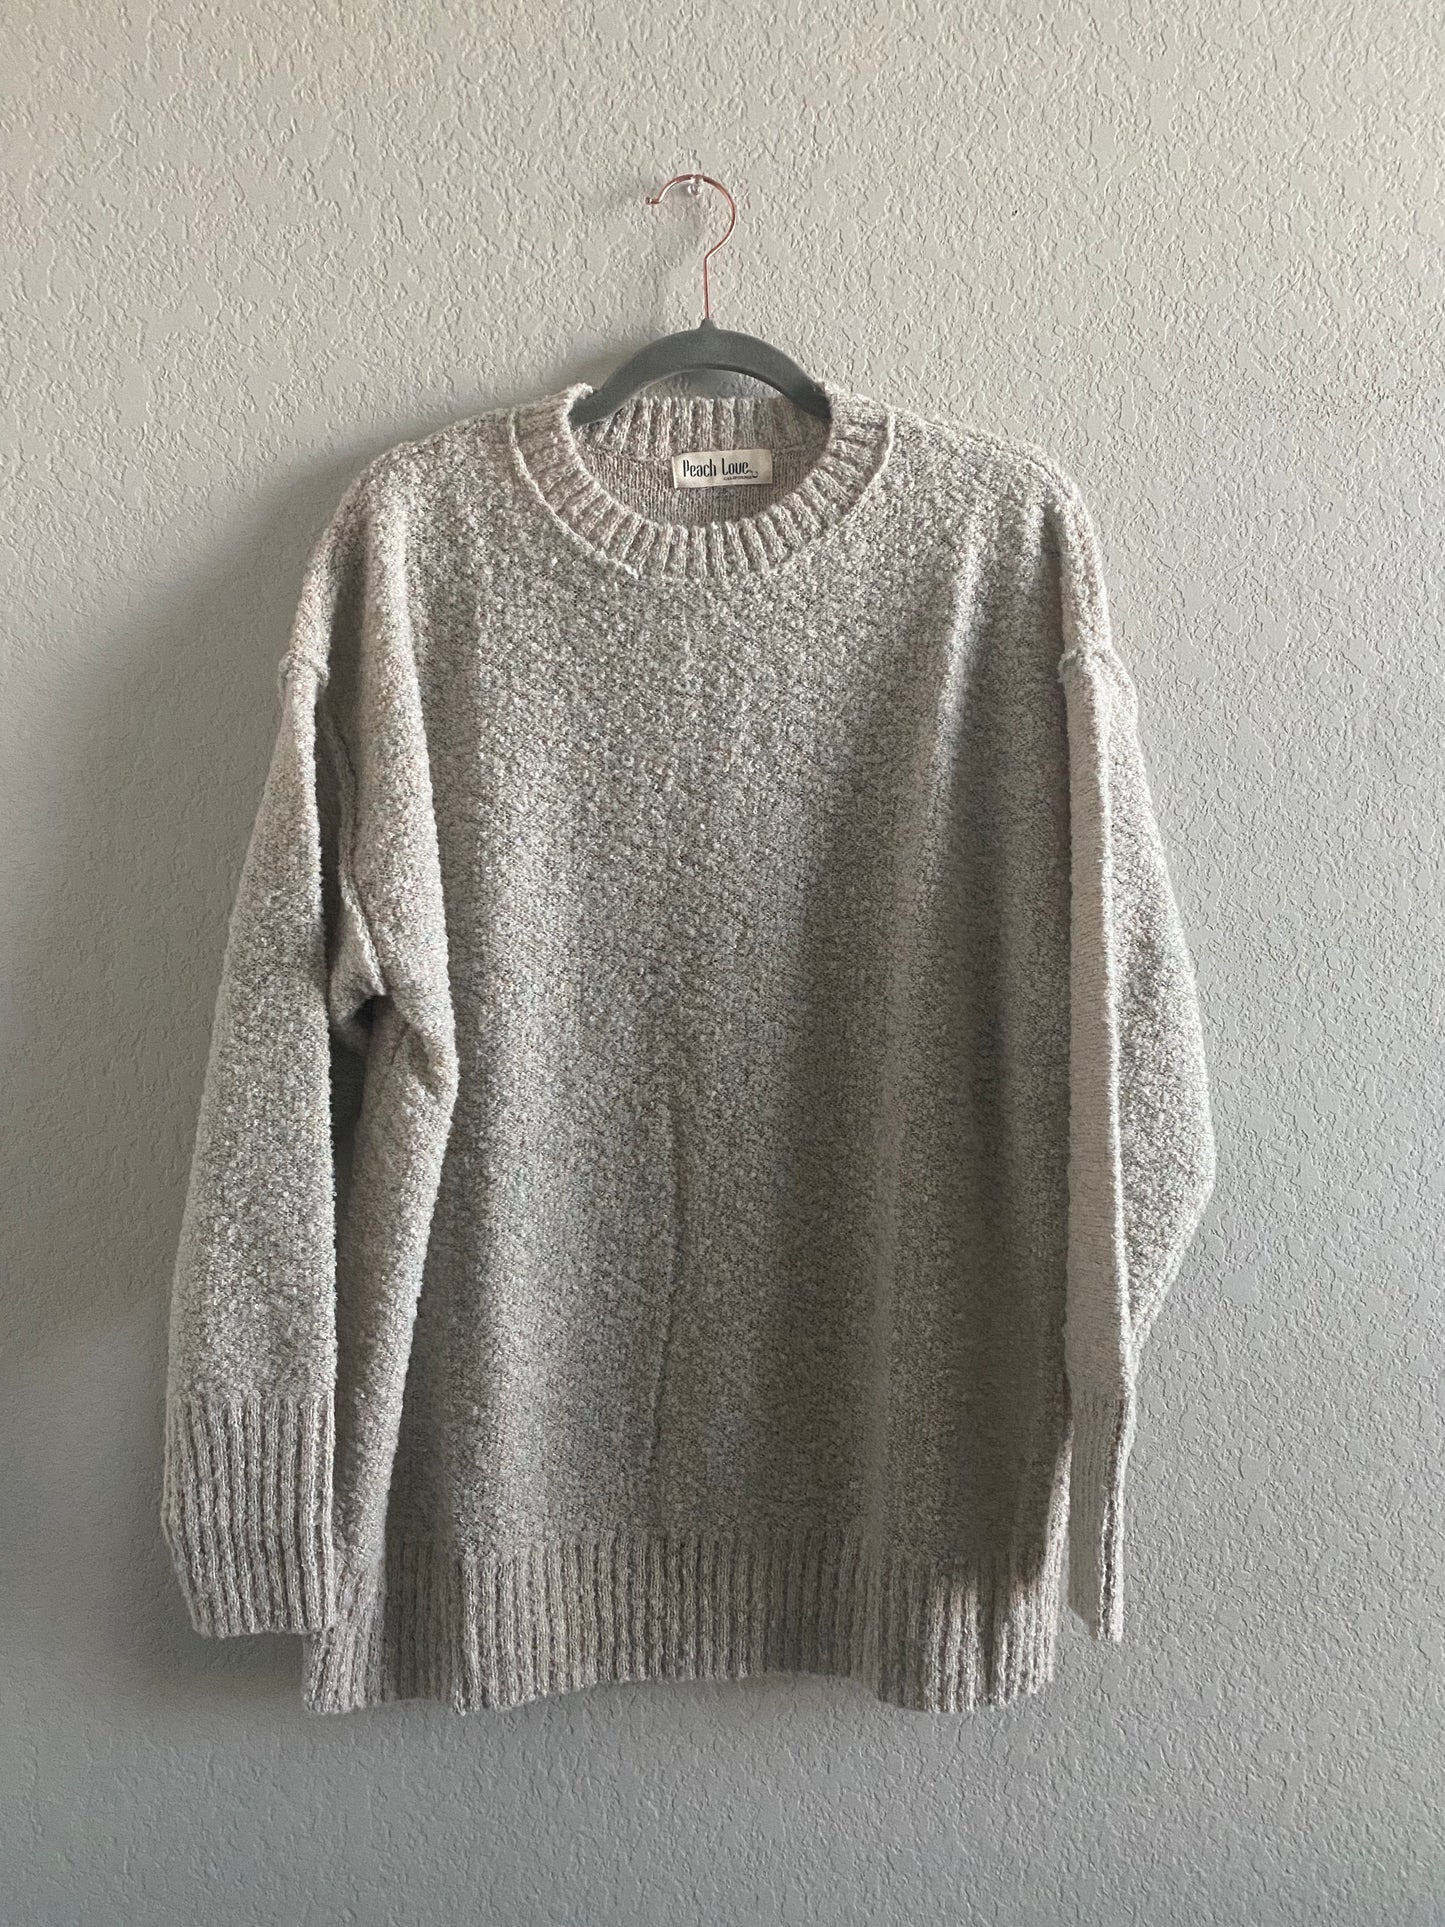 Fall cozy sweater top